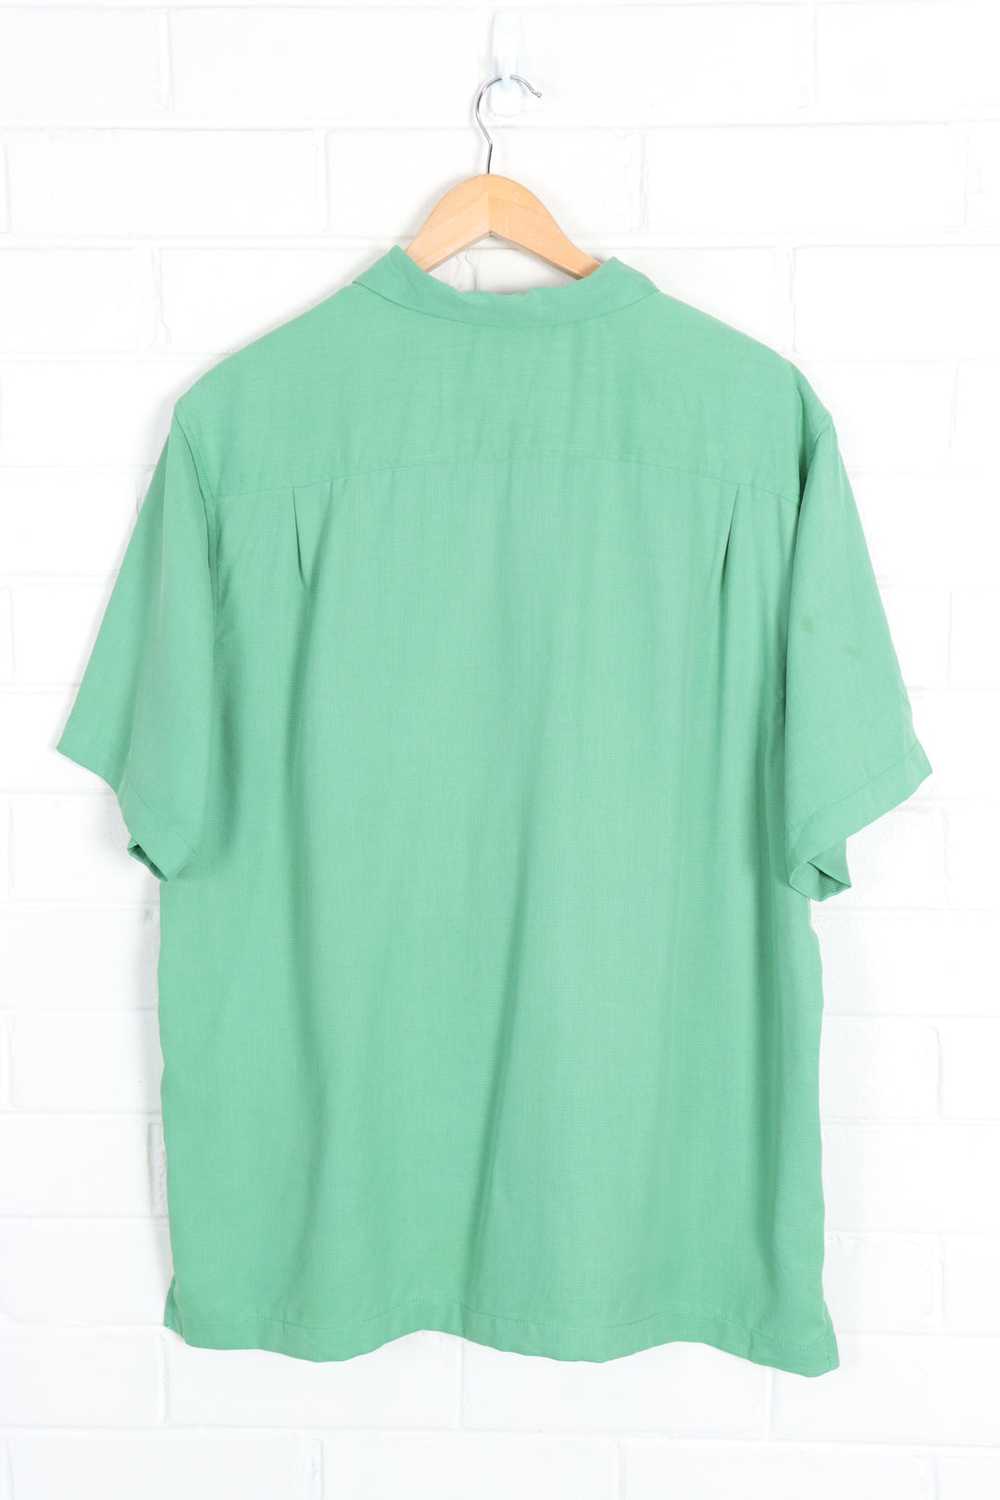 TOMMY BAHAMA Green Silk Short Sleeve Shirt (XL) - image 3